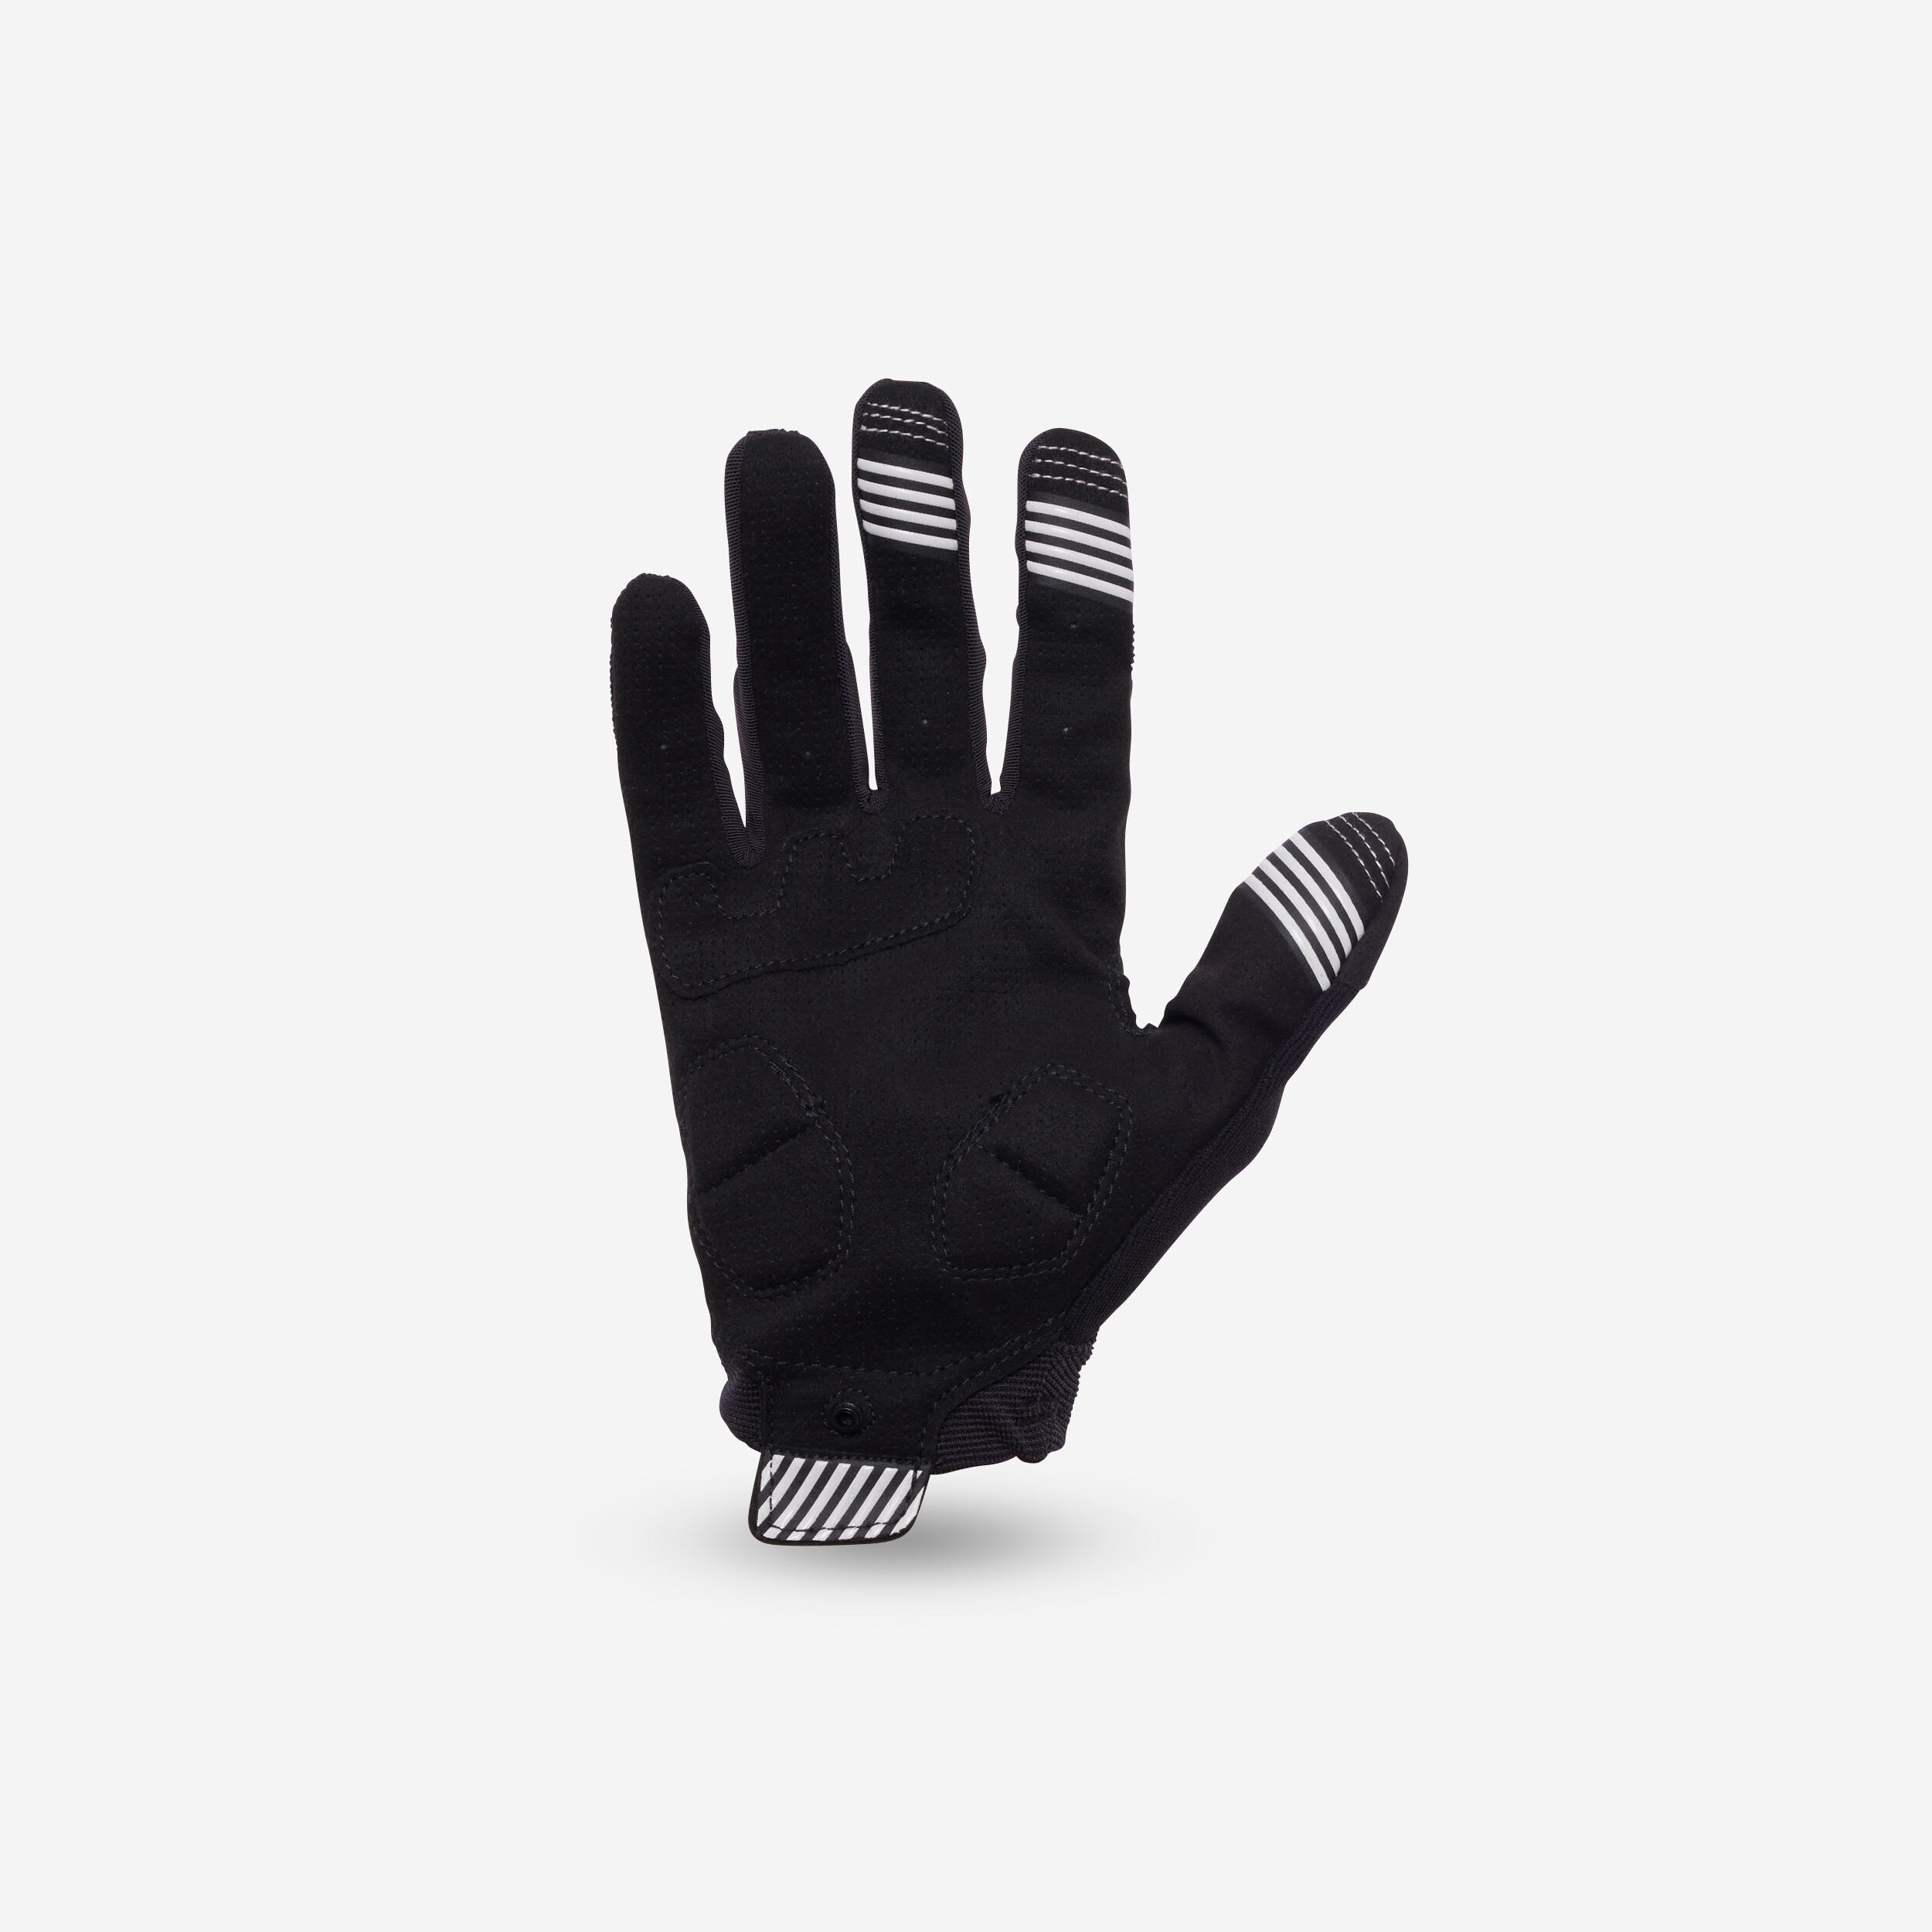 Mountain Biking Gloves ST 500 - Black 5/10